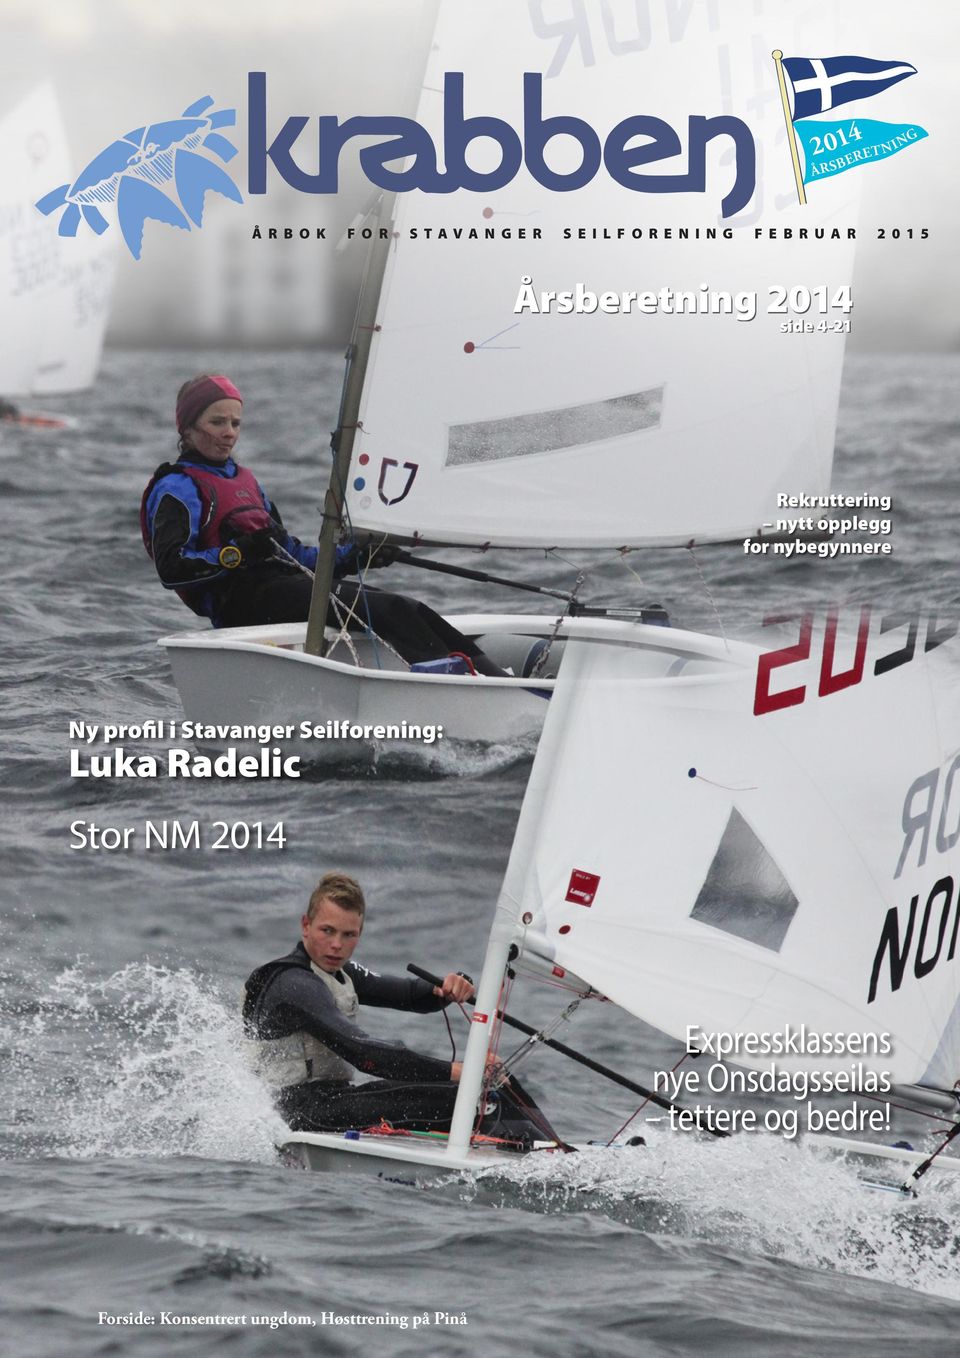 nybegynnere Ny profil i Stavanger Seilforening: Luka Radelic Stor NM 2014